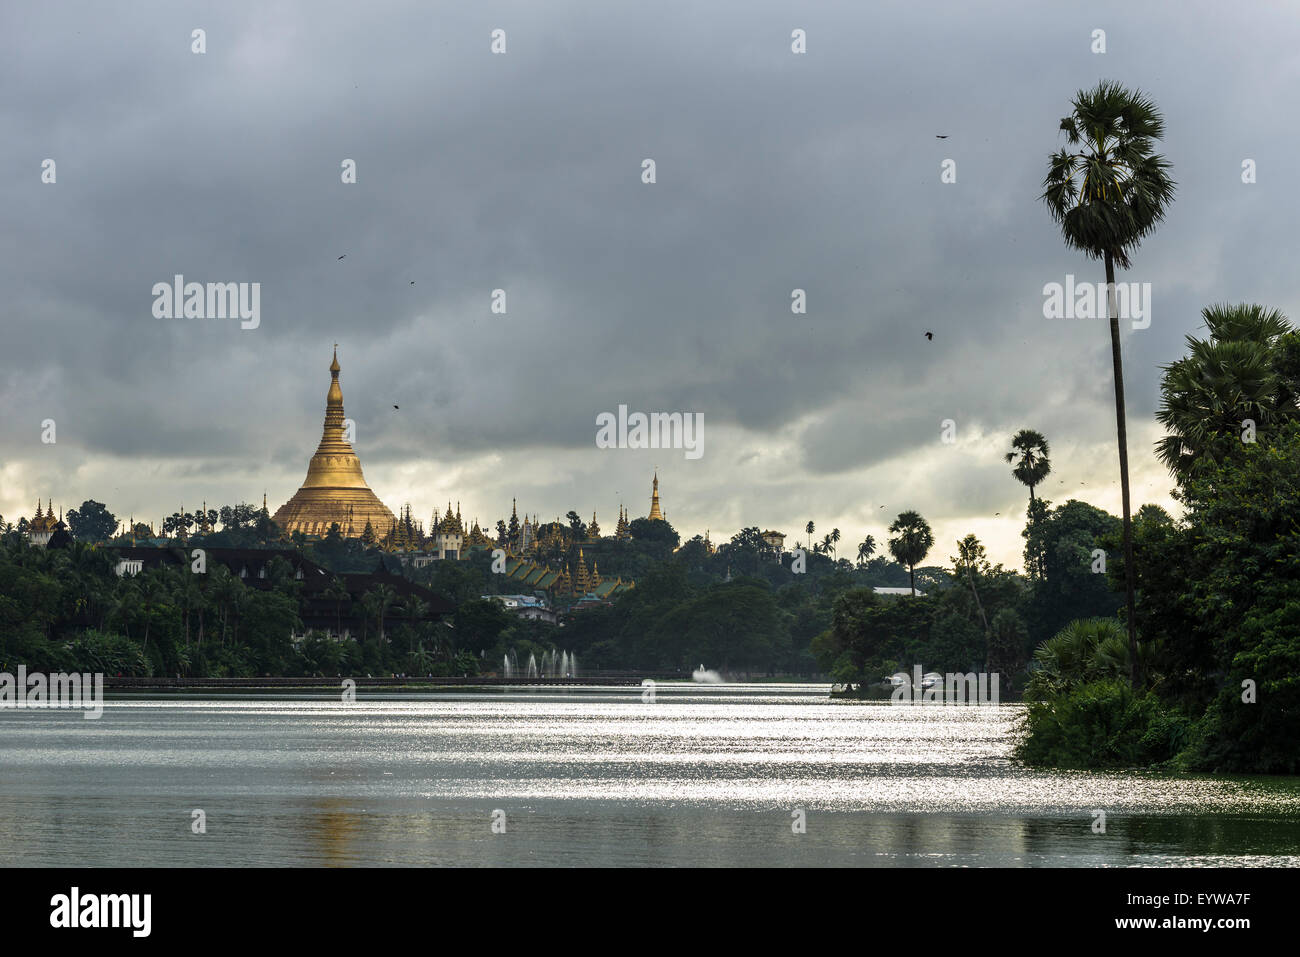 Golden main stupa, chedi, Shwedagon Pagoda, Kandawgyi Lake, Kandawgyi Nature Park, Yangon or Rangoon, Yangon Region, Myanmar Stock Photo